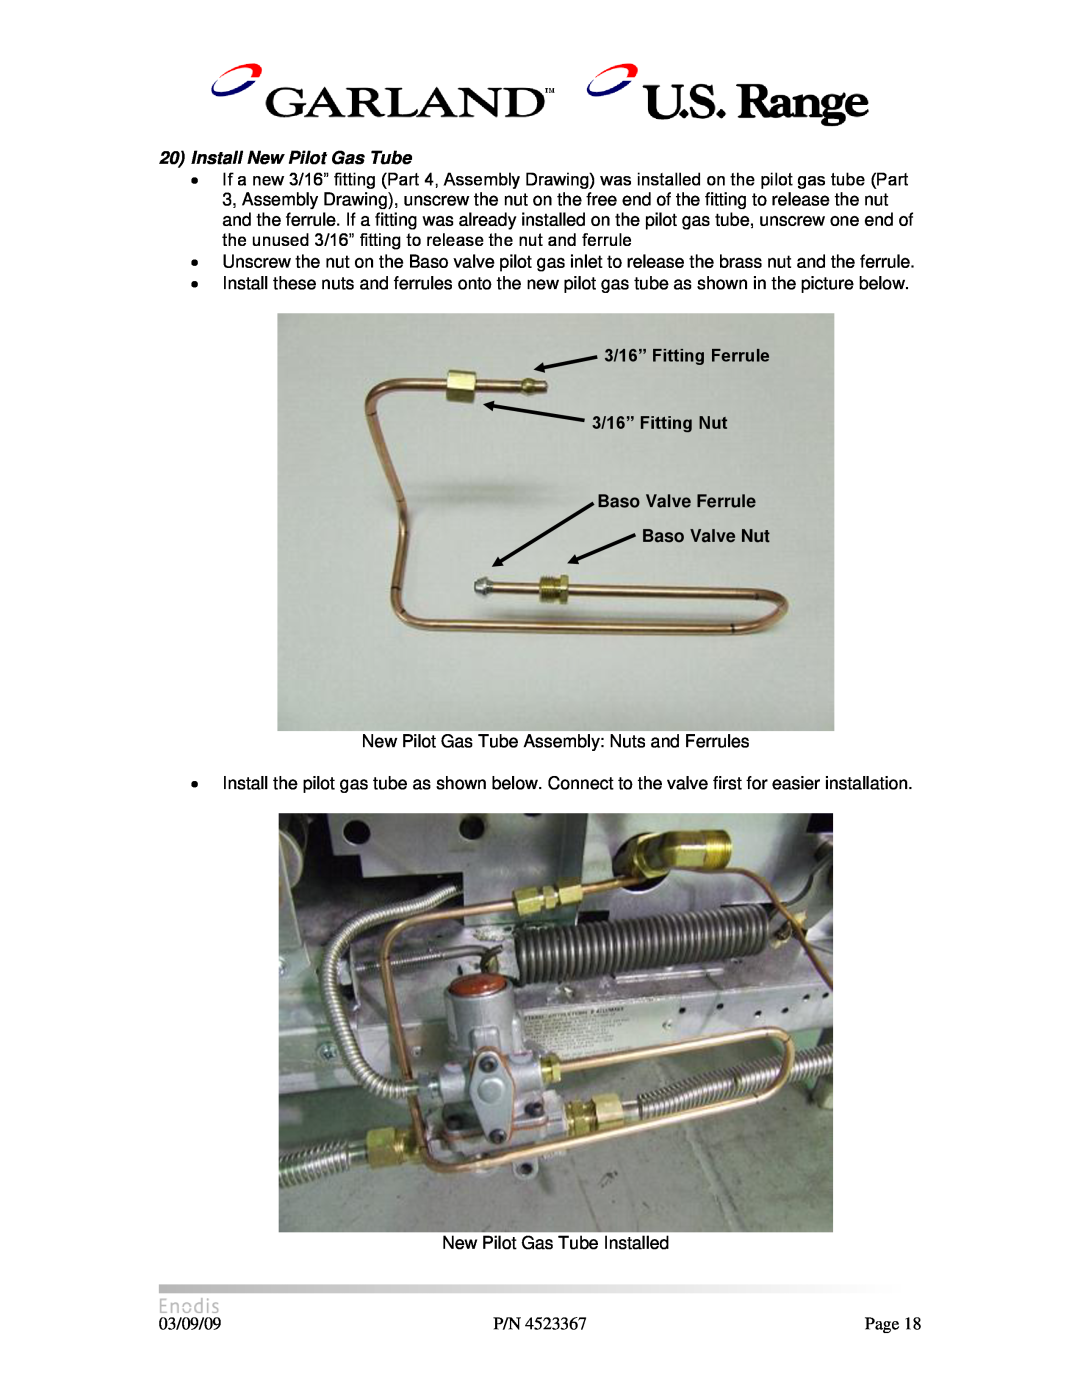 Garland H280 manual Install New Pilot Gas Tube, 3/16” Fitting Ferrule 3/16” Fitting Nut Baso Valve Ferrule, Baso Valve Nut 